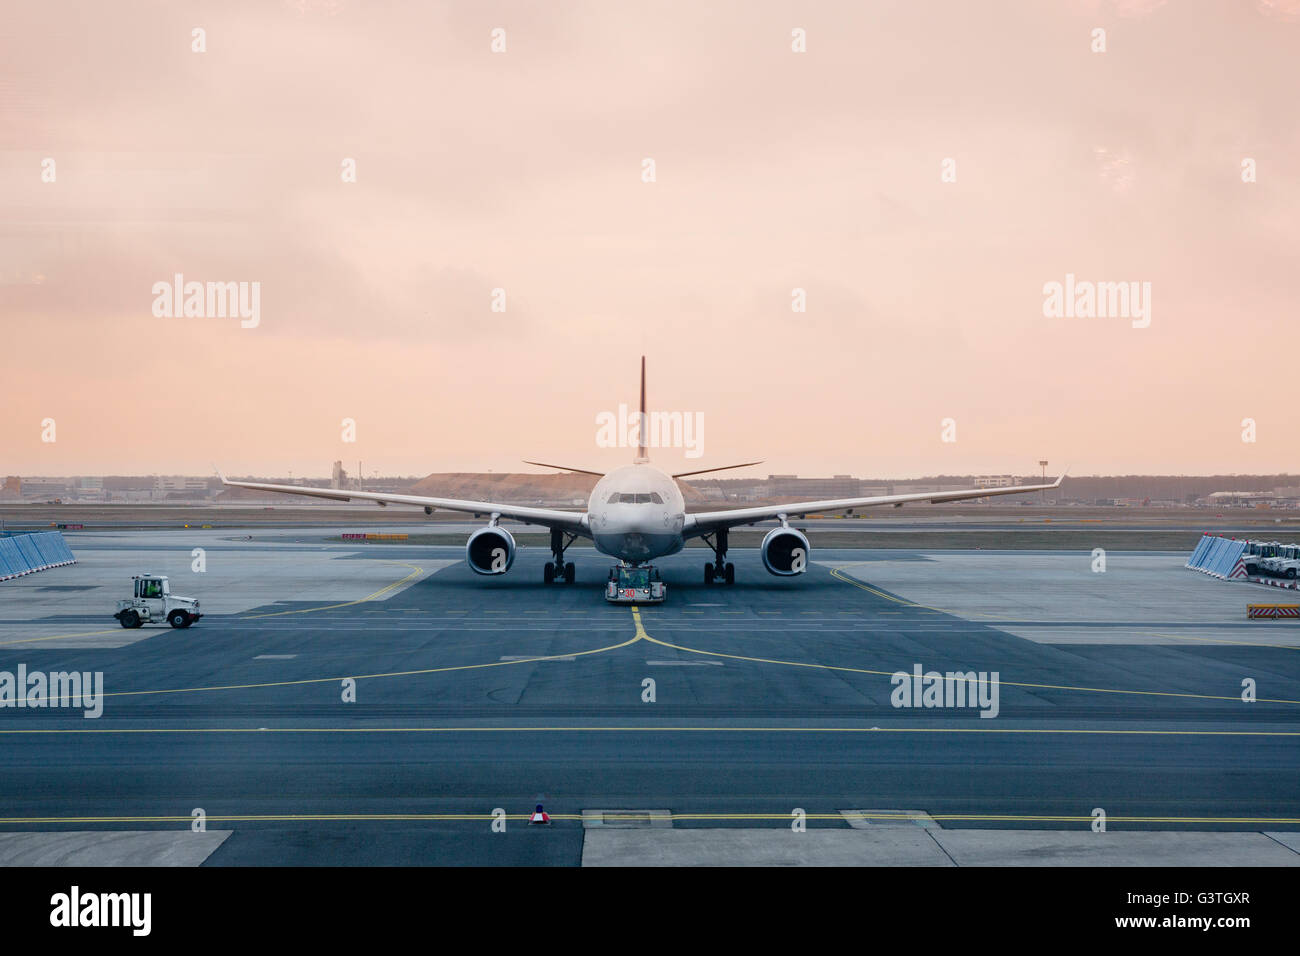 Germany, Frankfurt, Airplane on runway at dusk Stock Photo